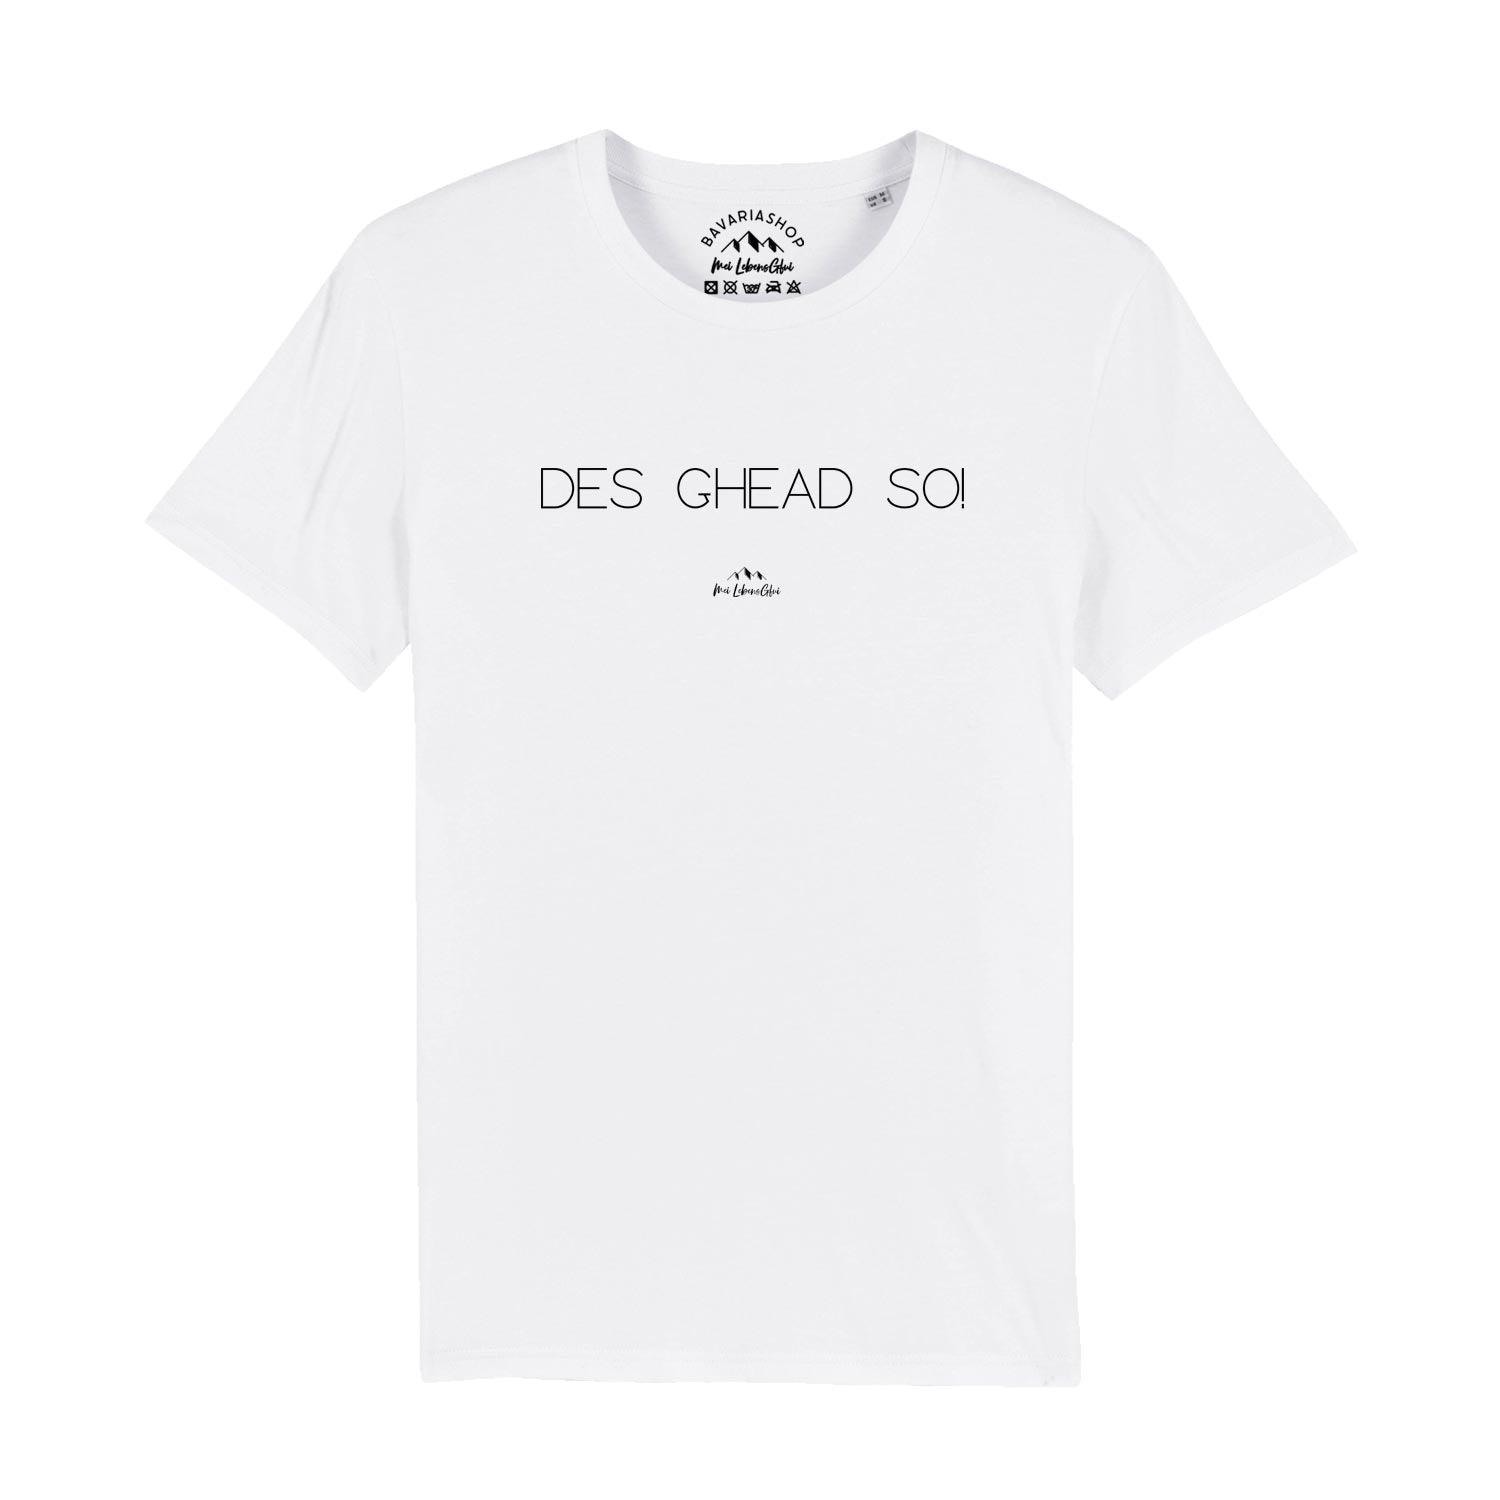 Herren T-Shirt "Des ghead so!" - bavariashop - mei LebensGfui